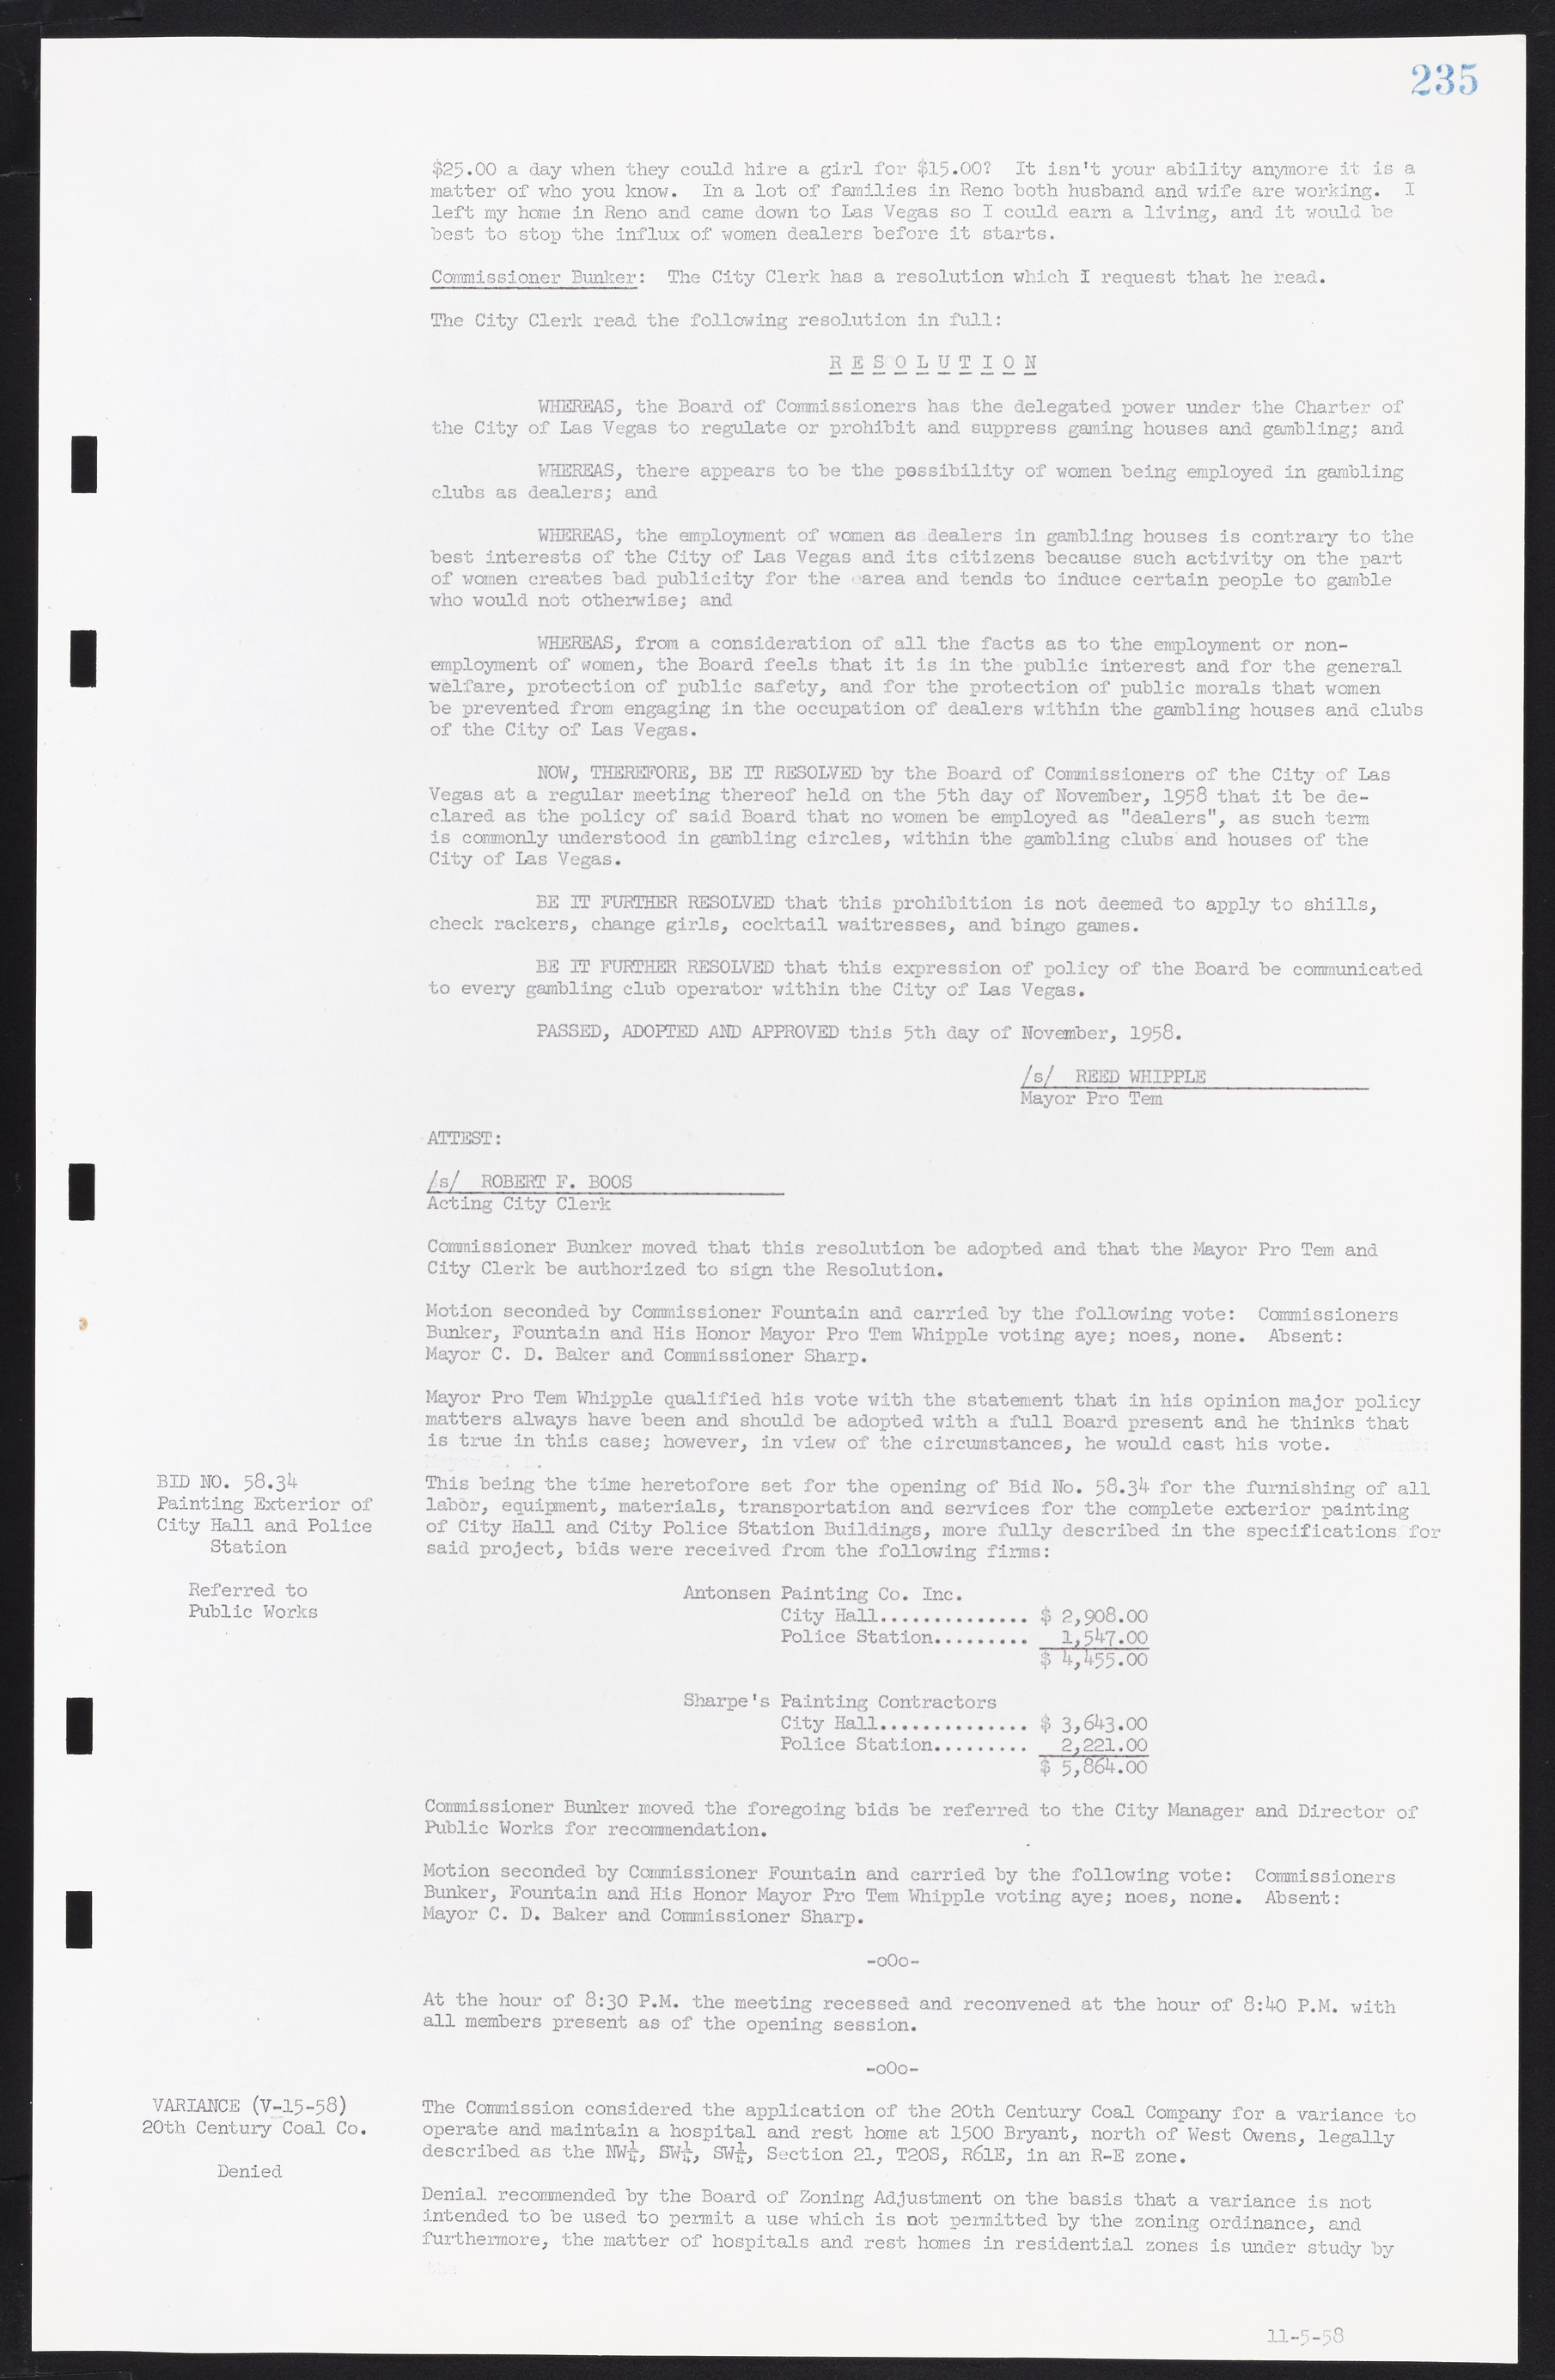 Las Vegas City Commission Minutes, November 20, 1957 to December 2, 1959, lvc000011-243